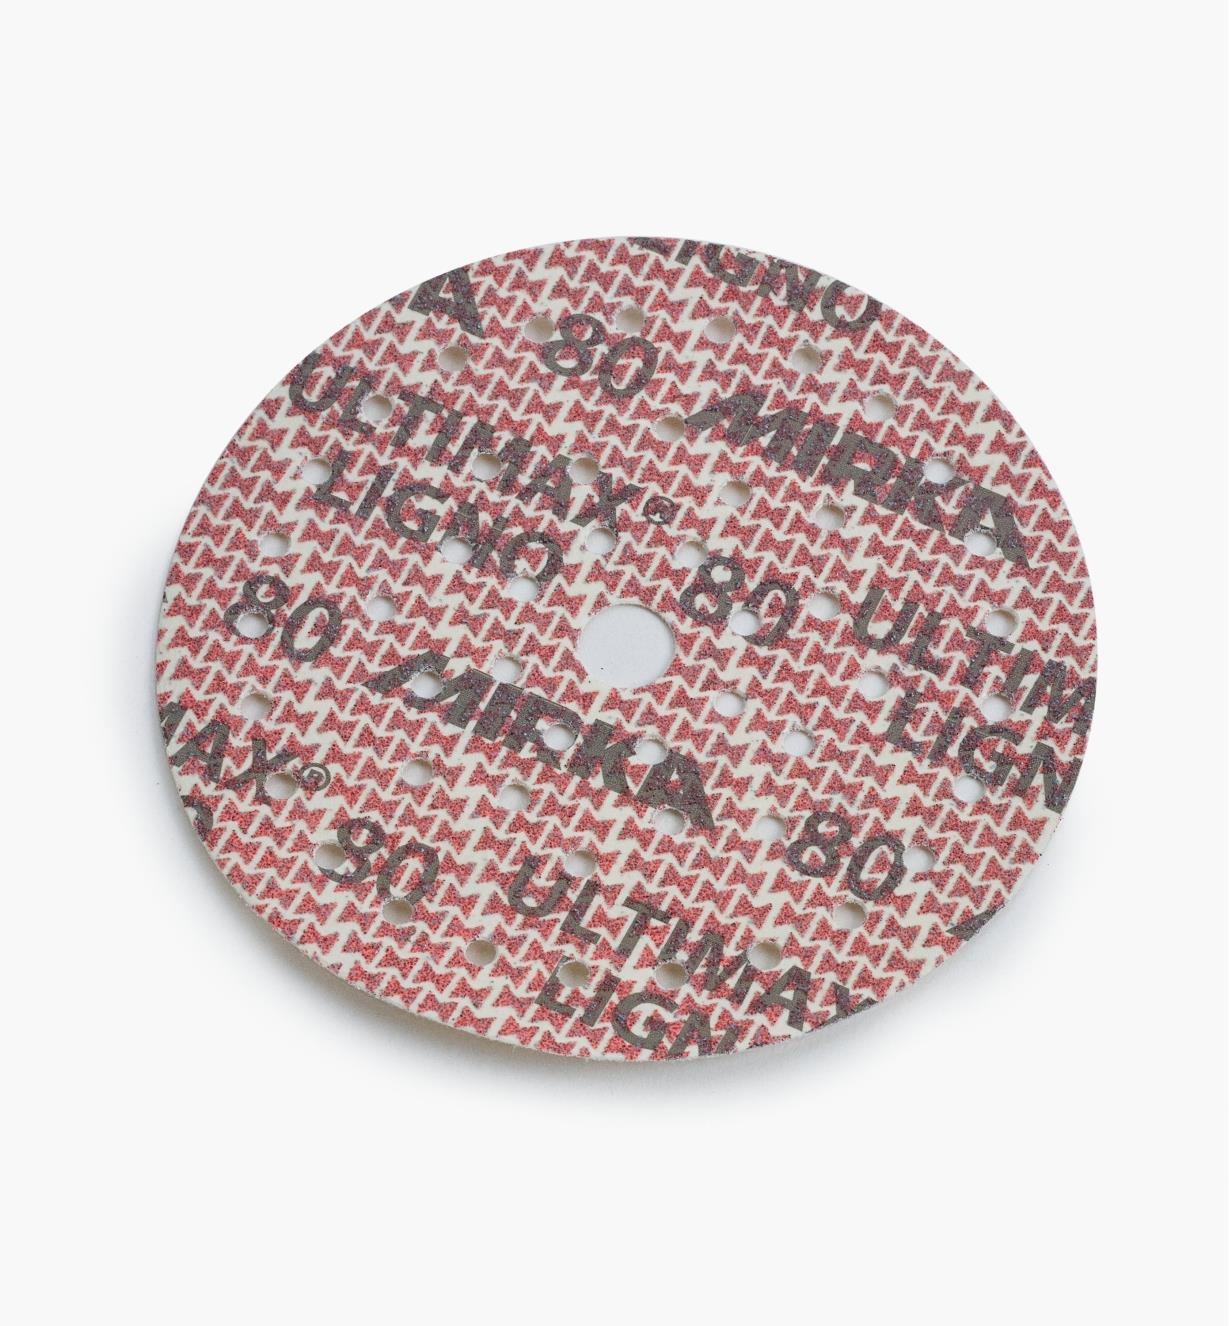 08K2203 - 6" 80x Ultimax Ligno Grip Disc, ea.